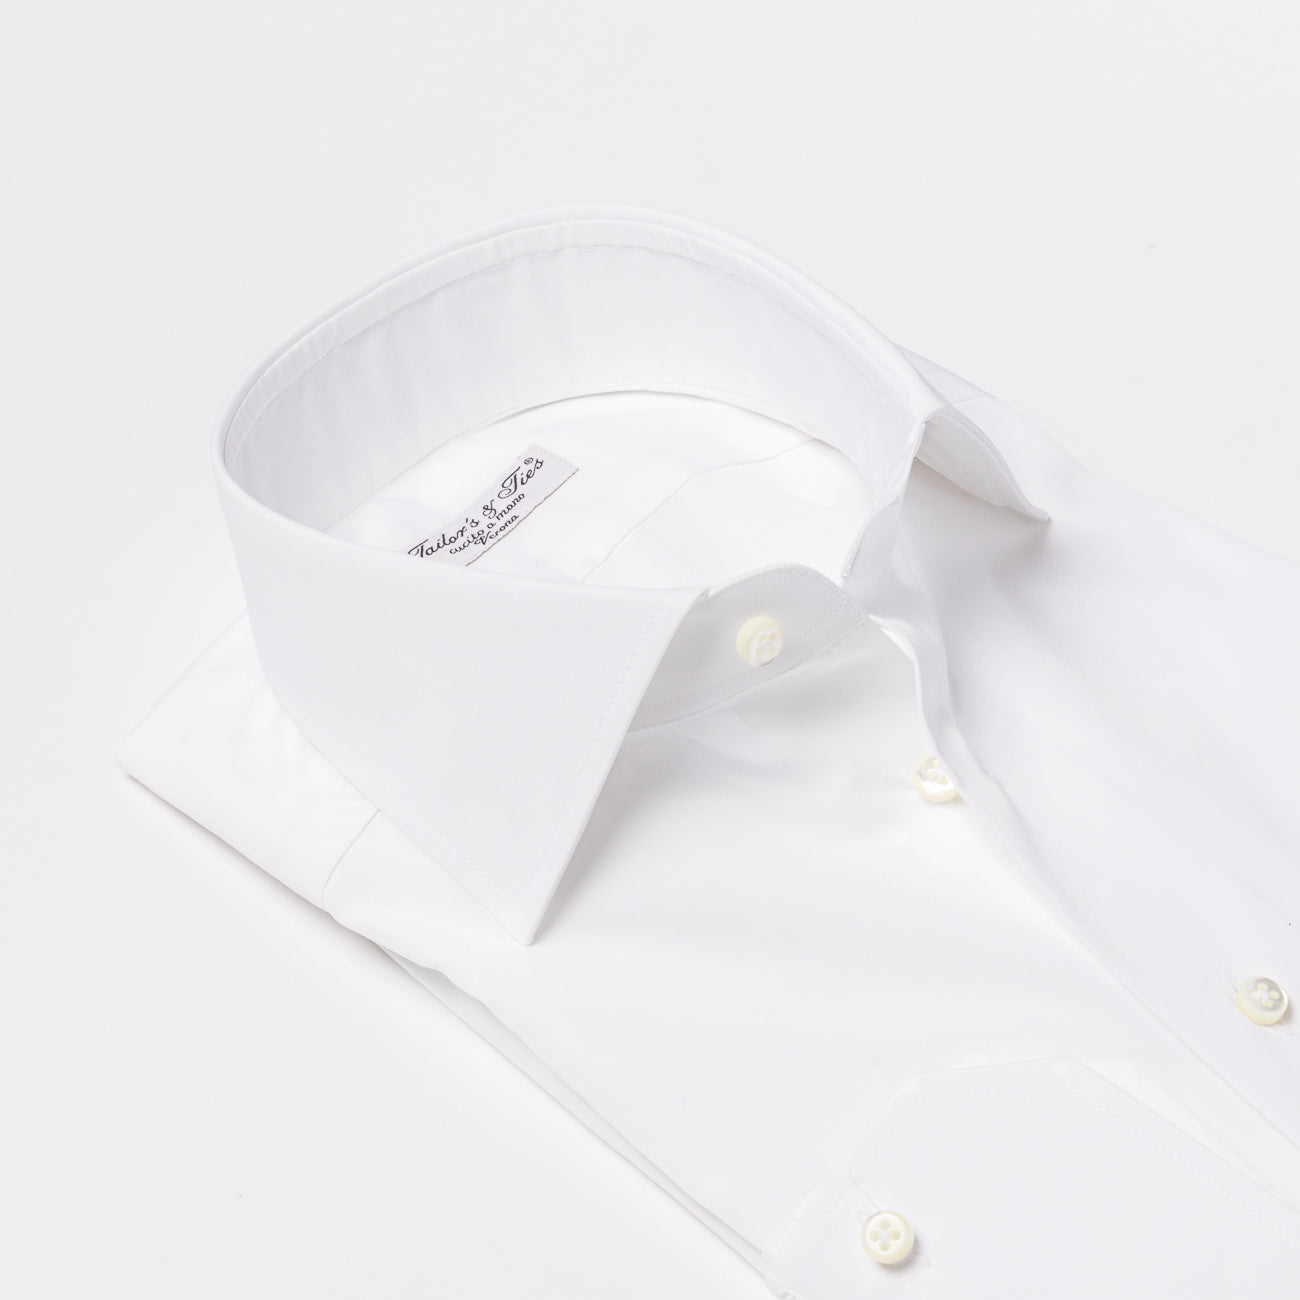 Camicia classica Tailors & Ties in cotone bianco